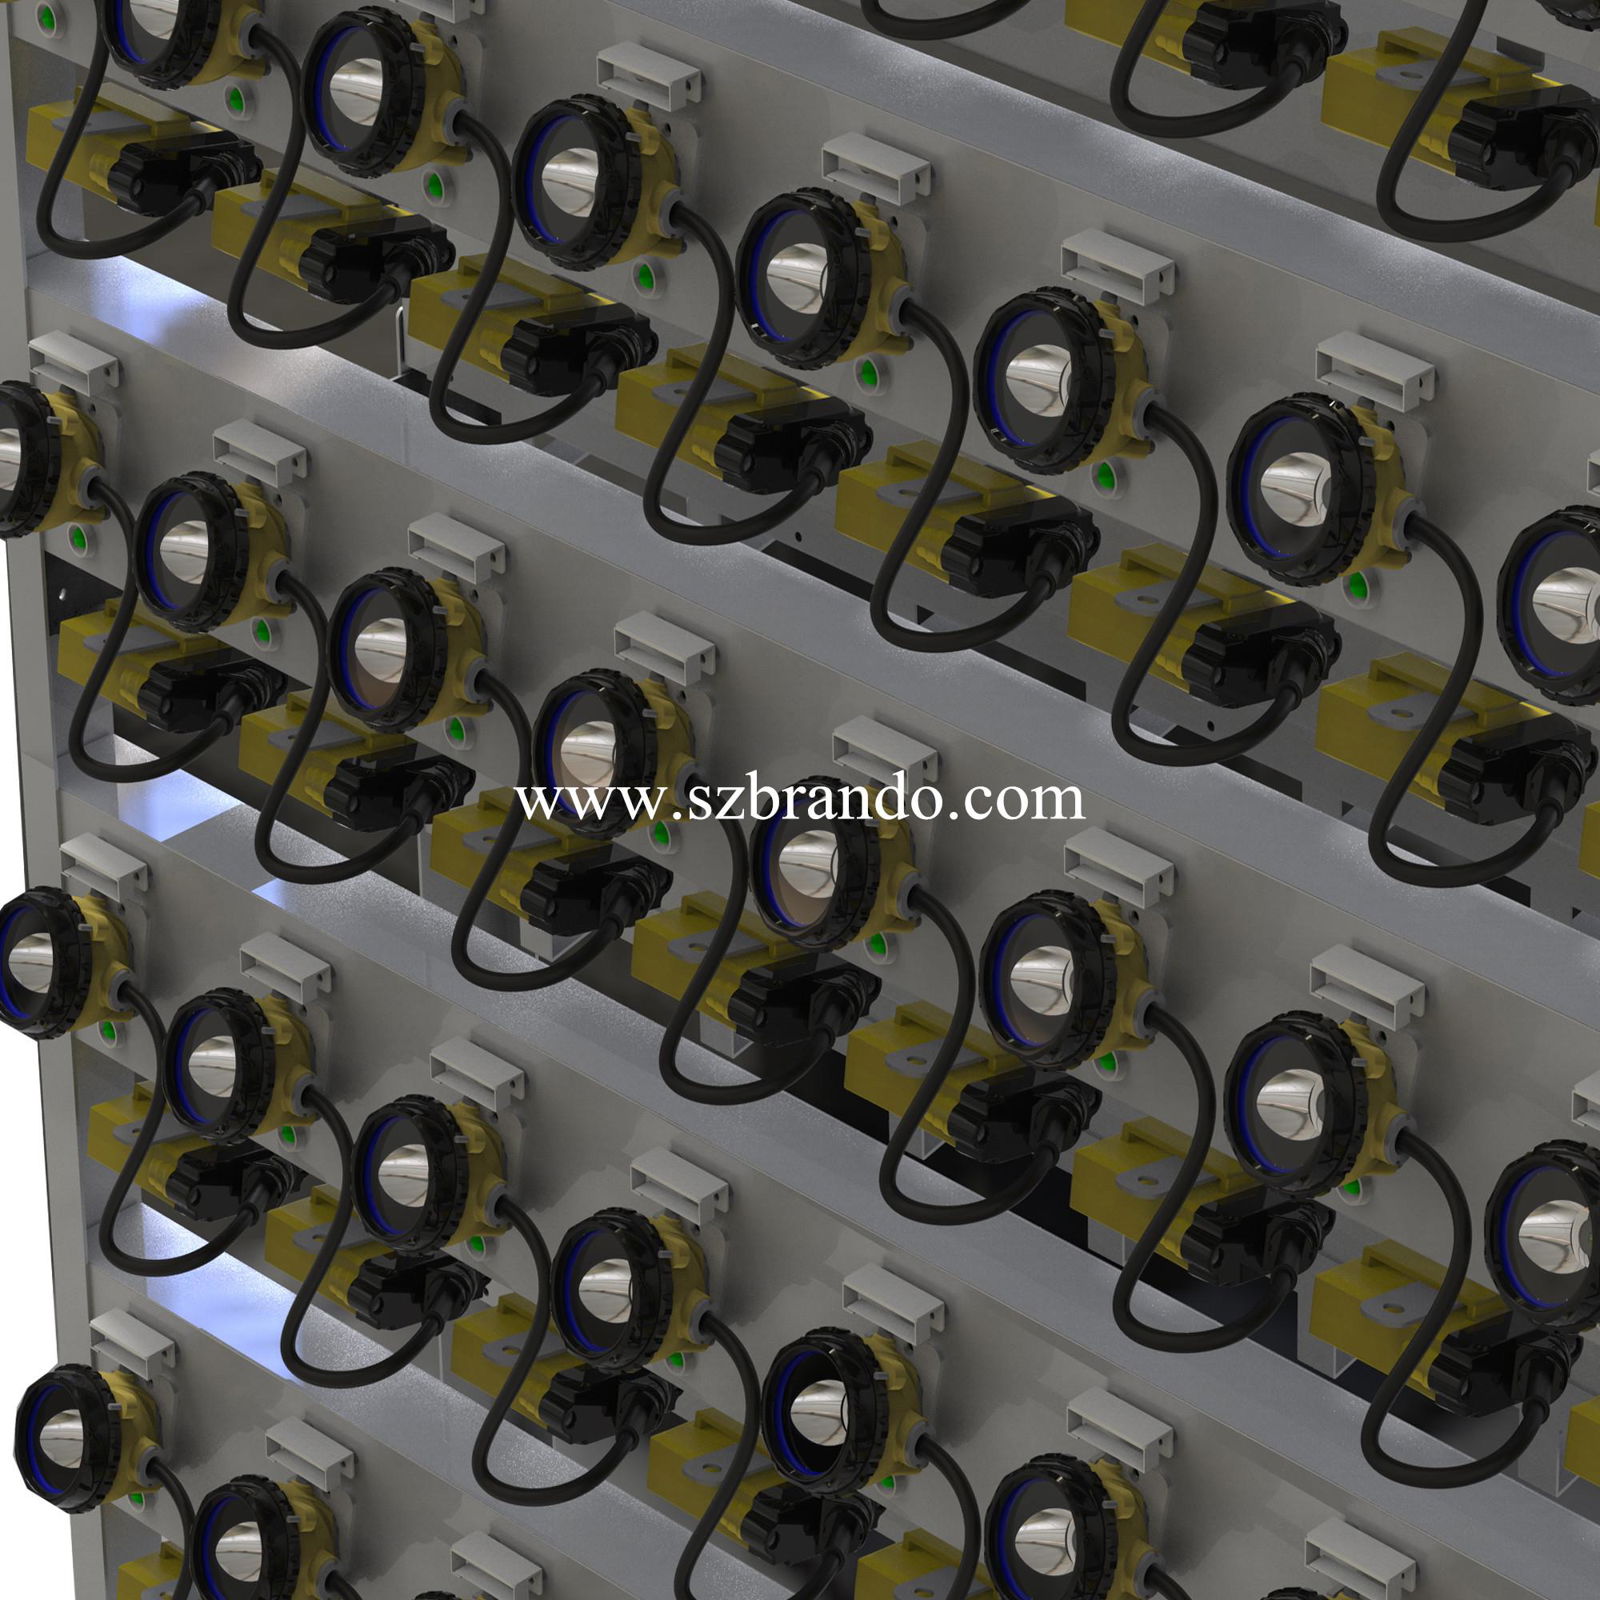 BRANDO New Design 96units LED Cap Lamp Charger Racks with detachable modular 5